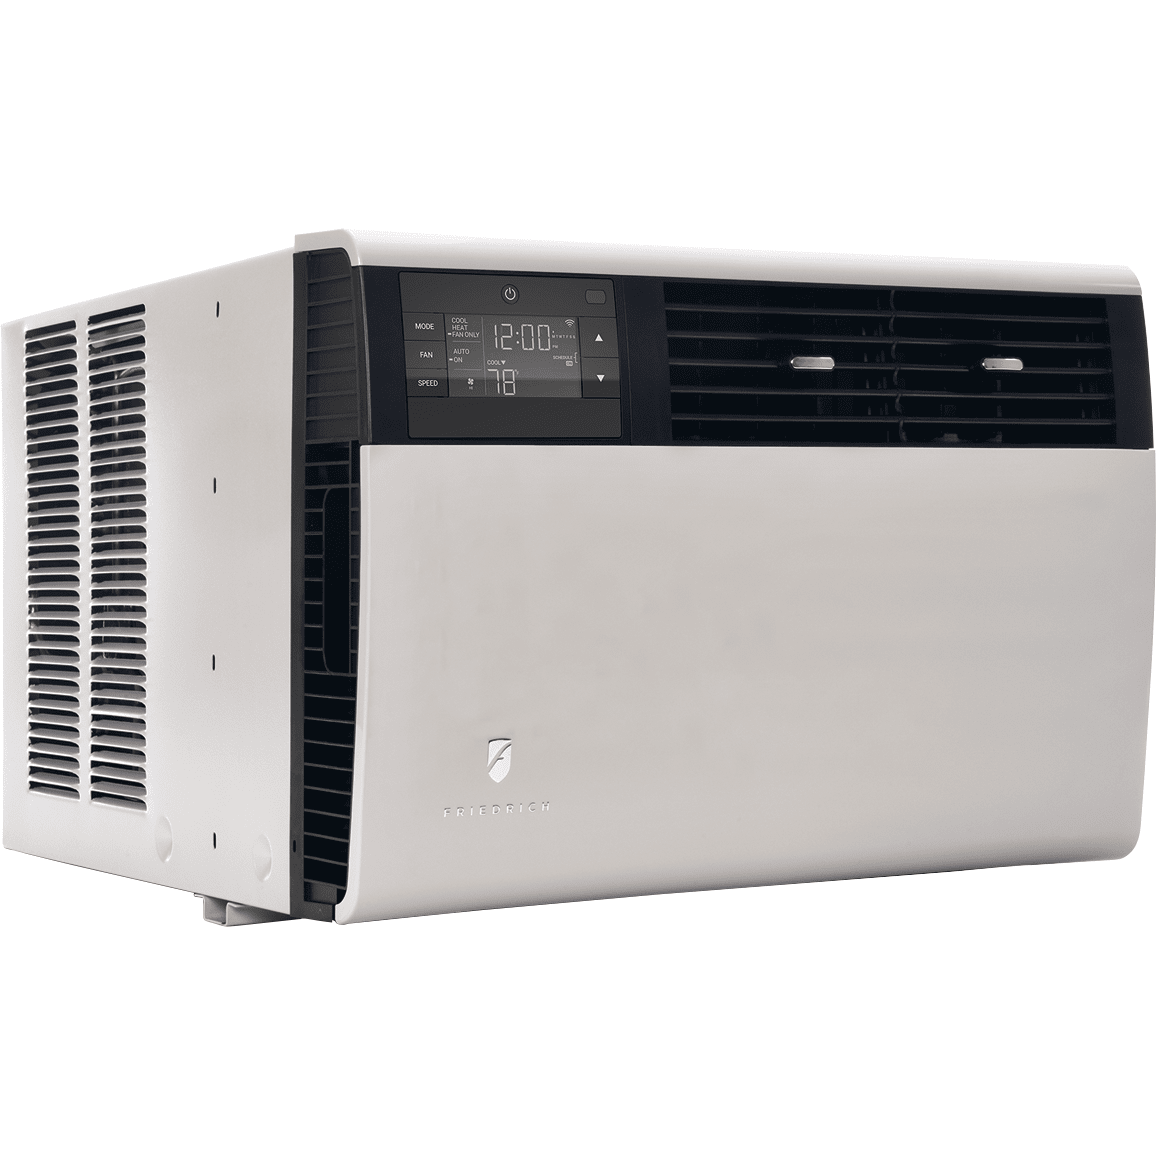 Friedrich Kuhl 8,000 Btu Window Air Conditioner With Electric Heat